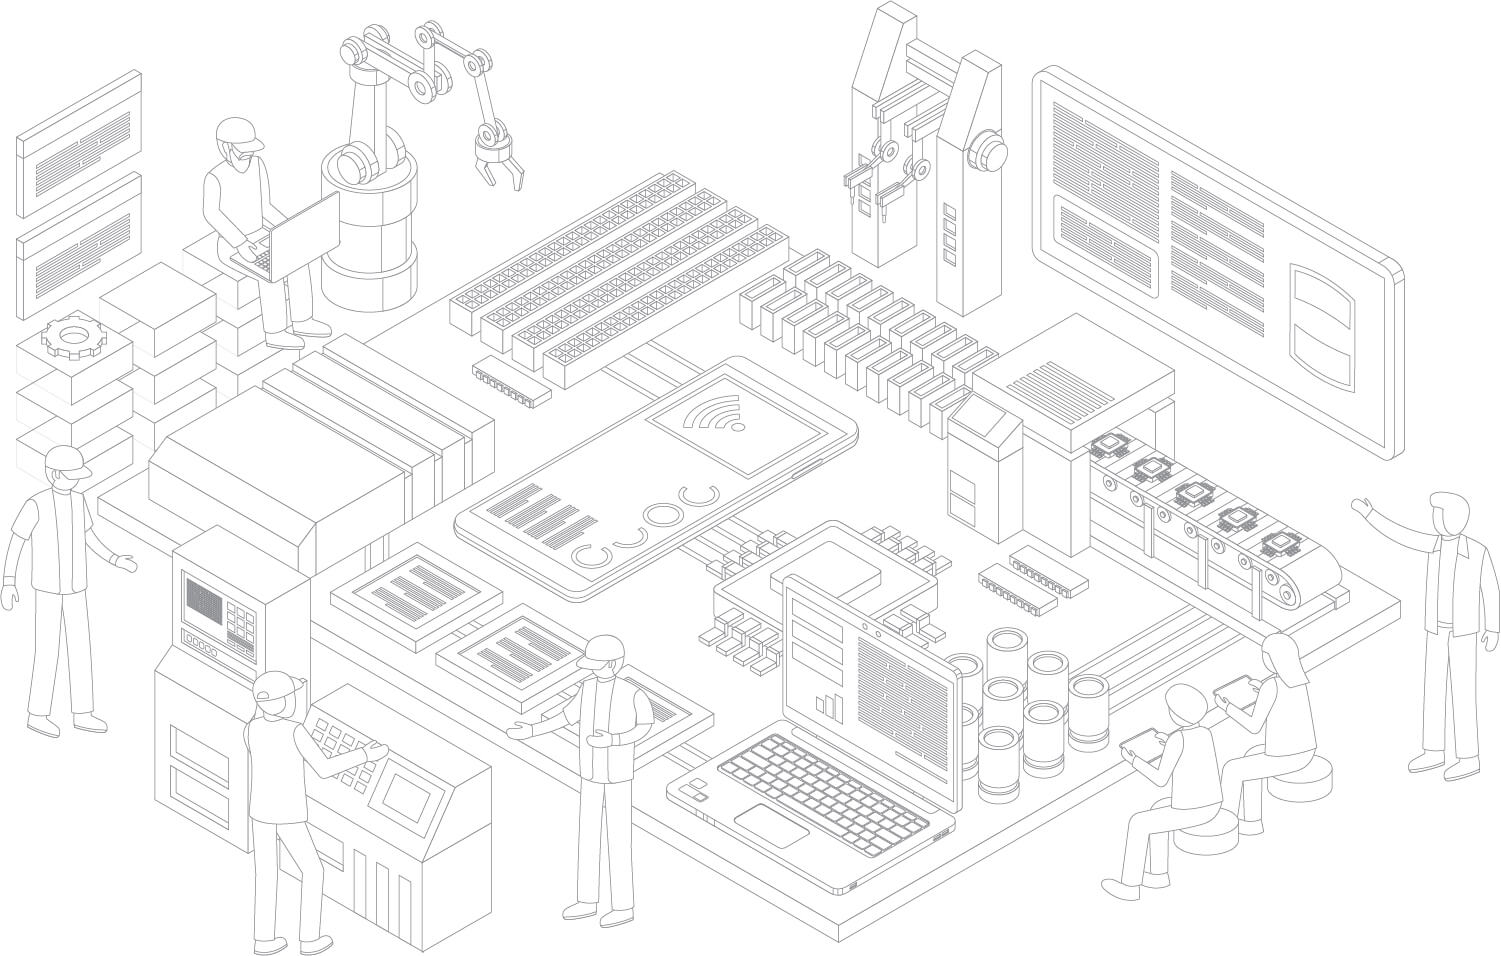 Illustration of People Producing Electronics